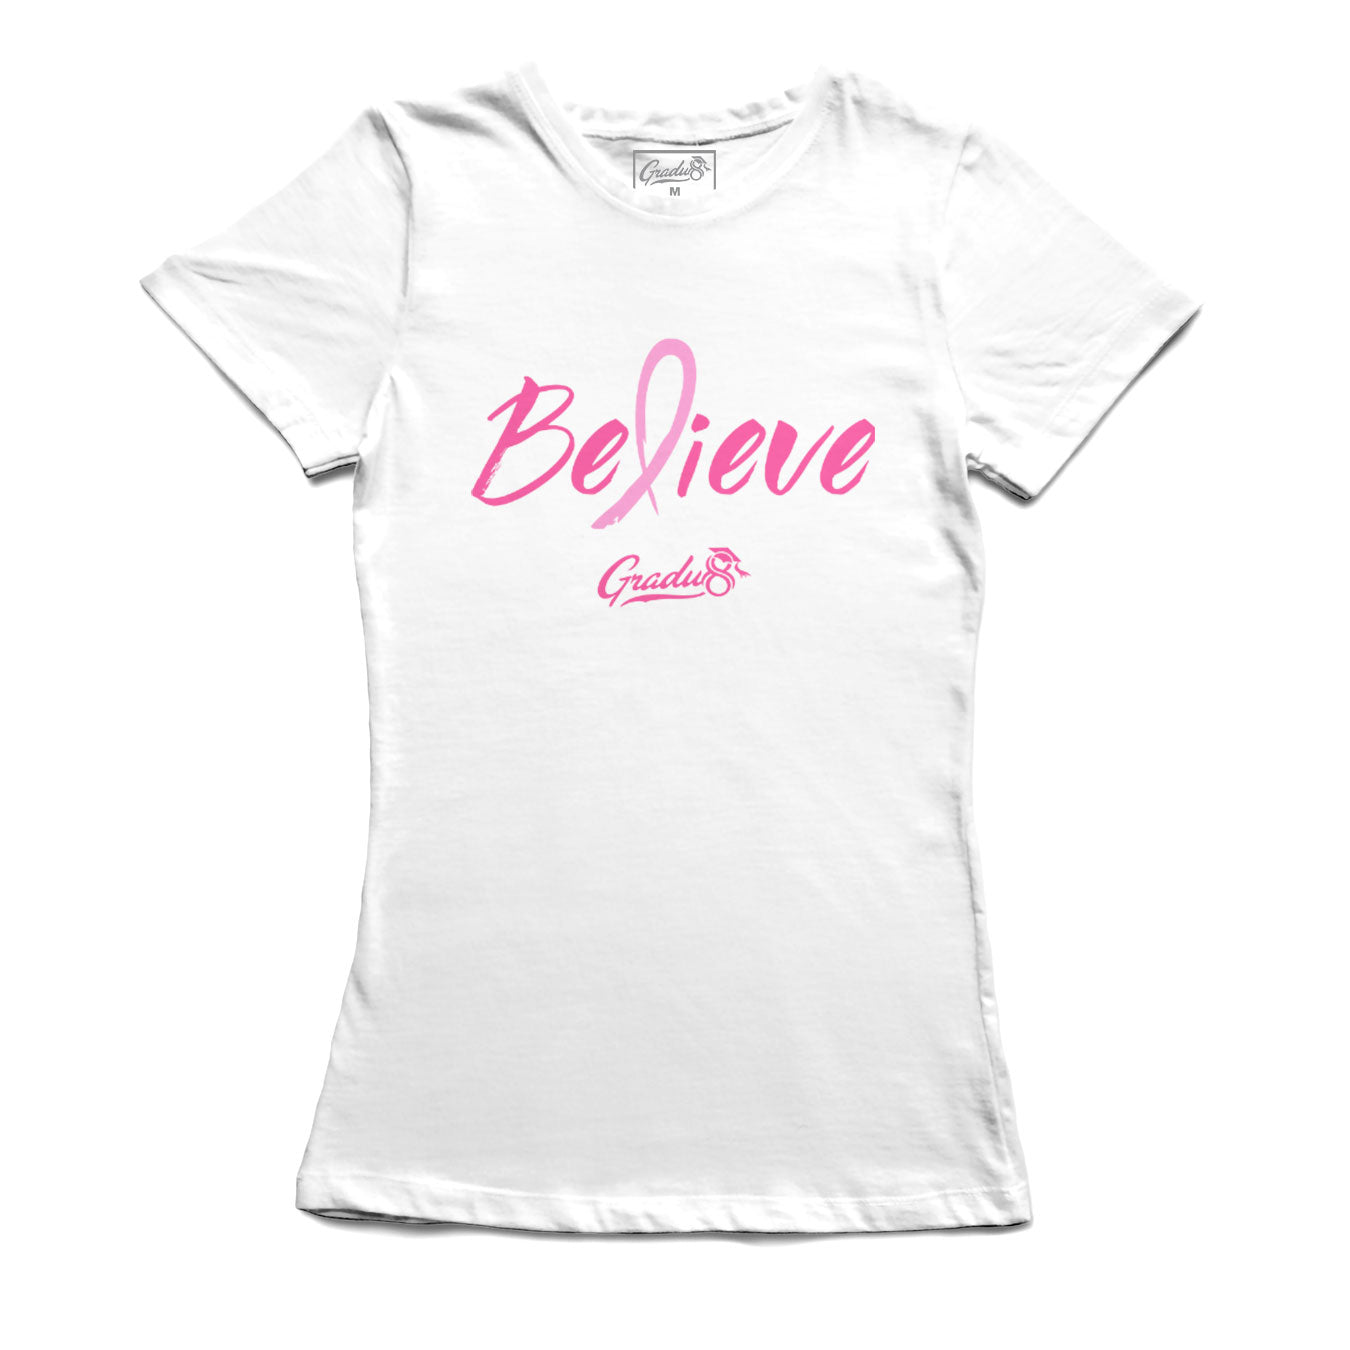 Believe: Women's Breast Cancer Awareness Crew T-shirt